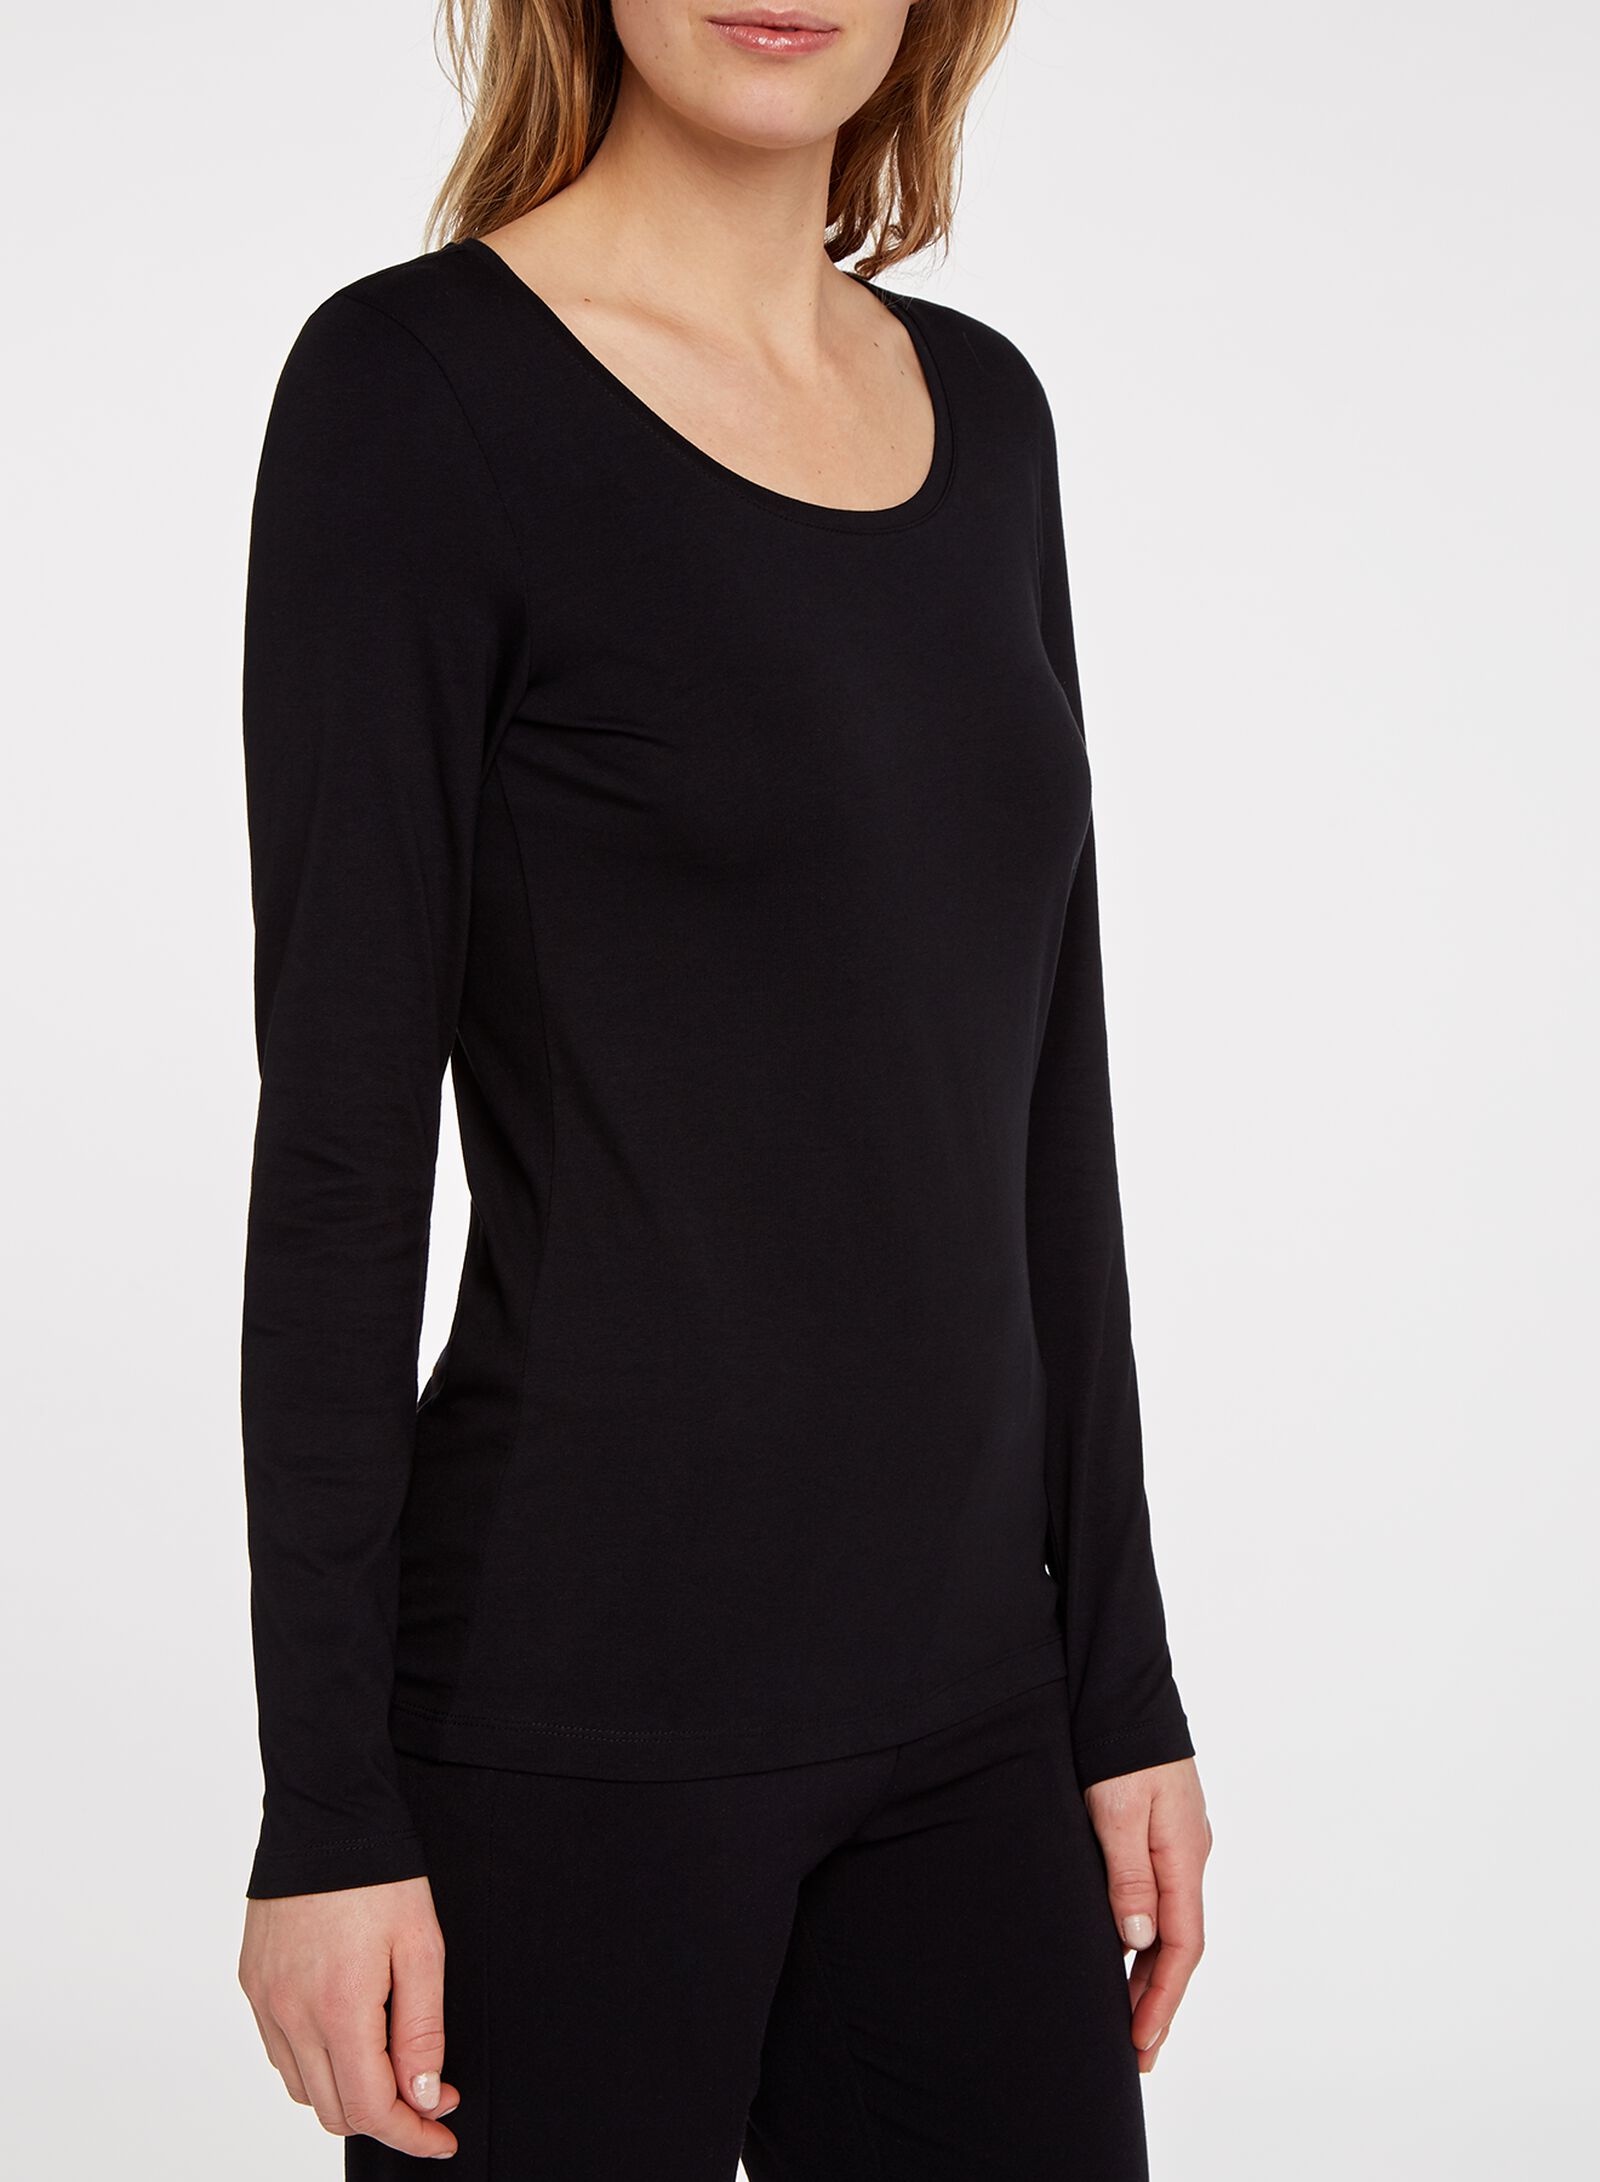 t-shirt femme classique noir S - 36396081 - HEMA